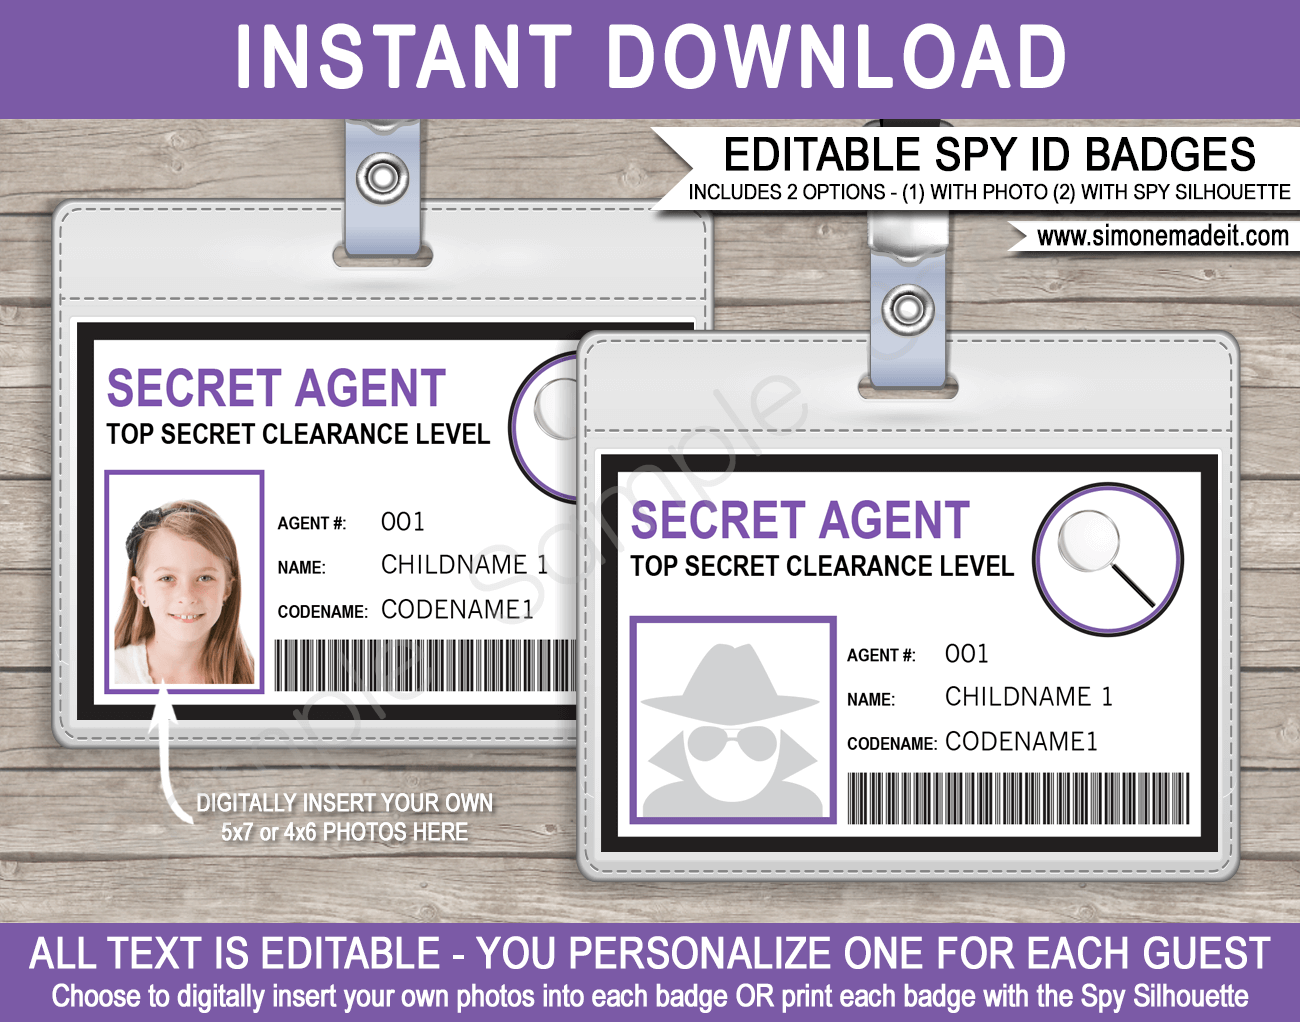 Girls Secret Agent Badge Template | Girls Spy Badge | ID Card | Birthday Party | DIY Editable & Printable | INSTANT DOWNLOAD $3.50 via SIMONEmadeit.com